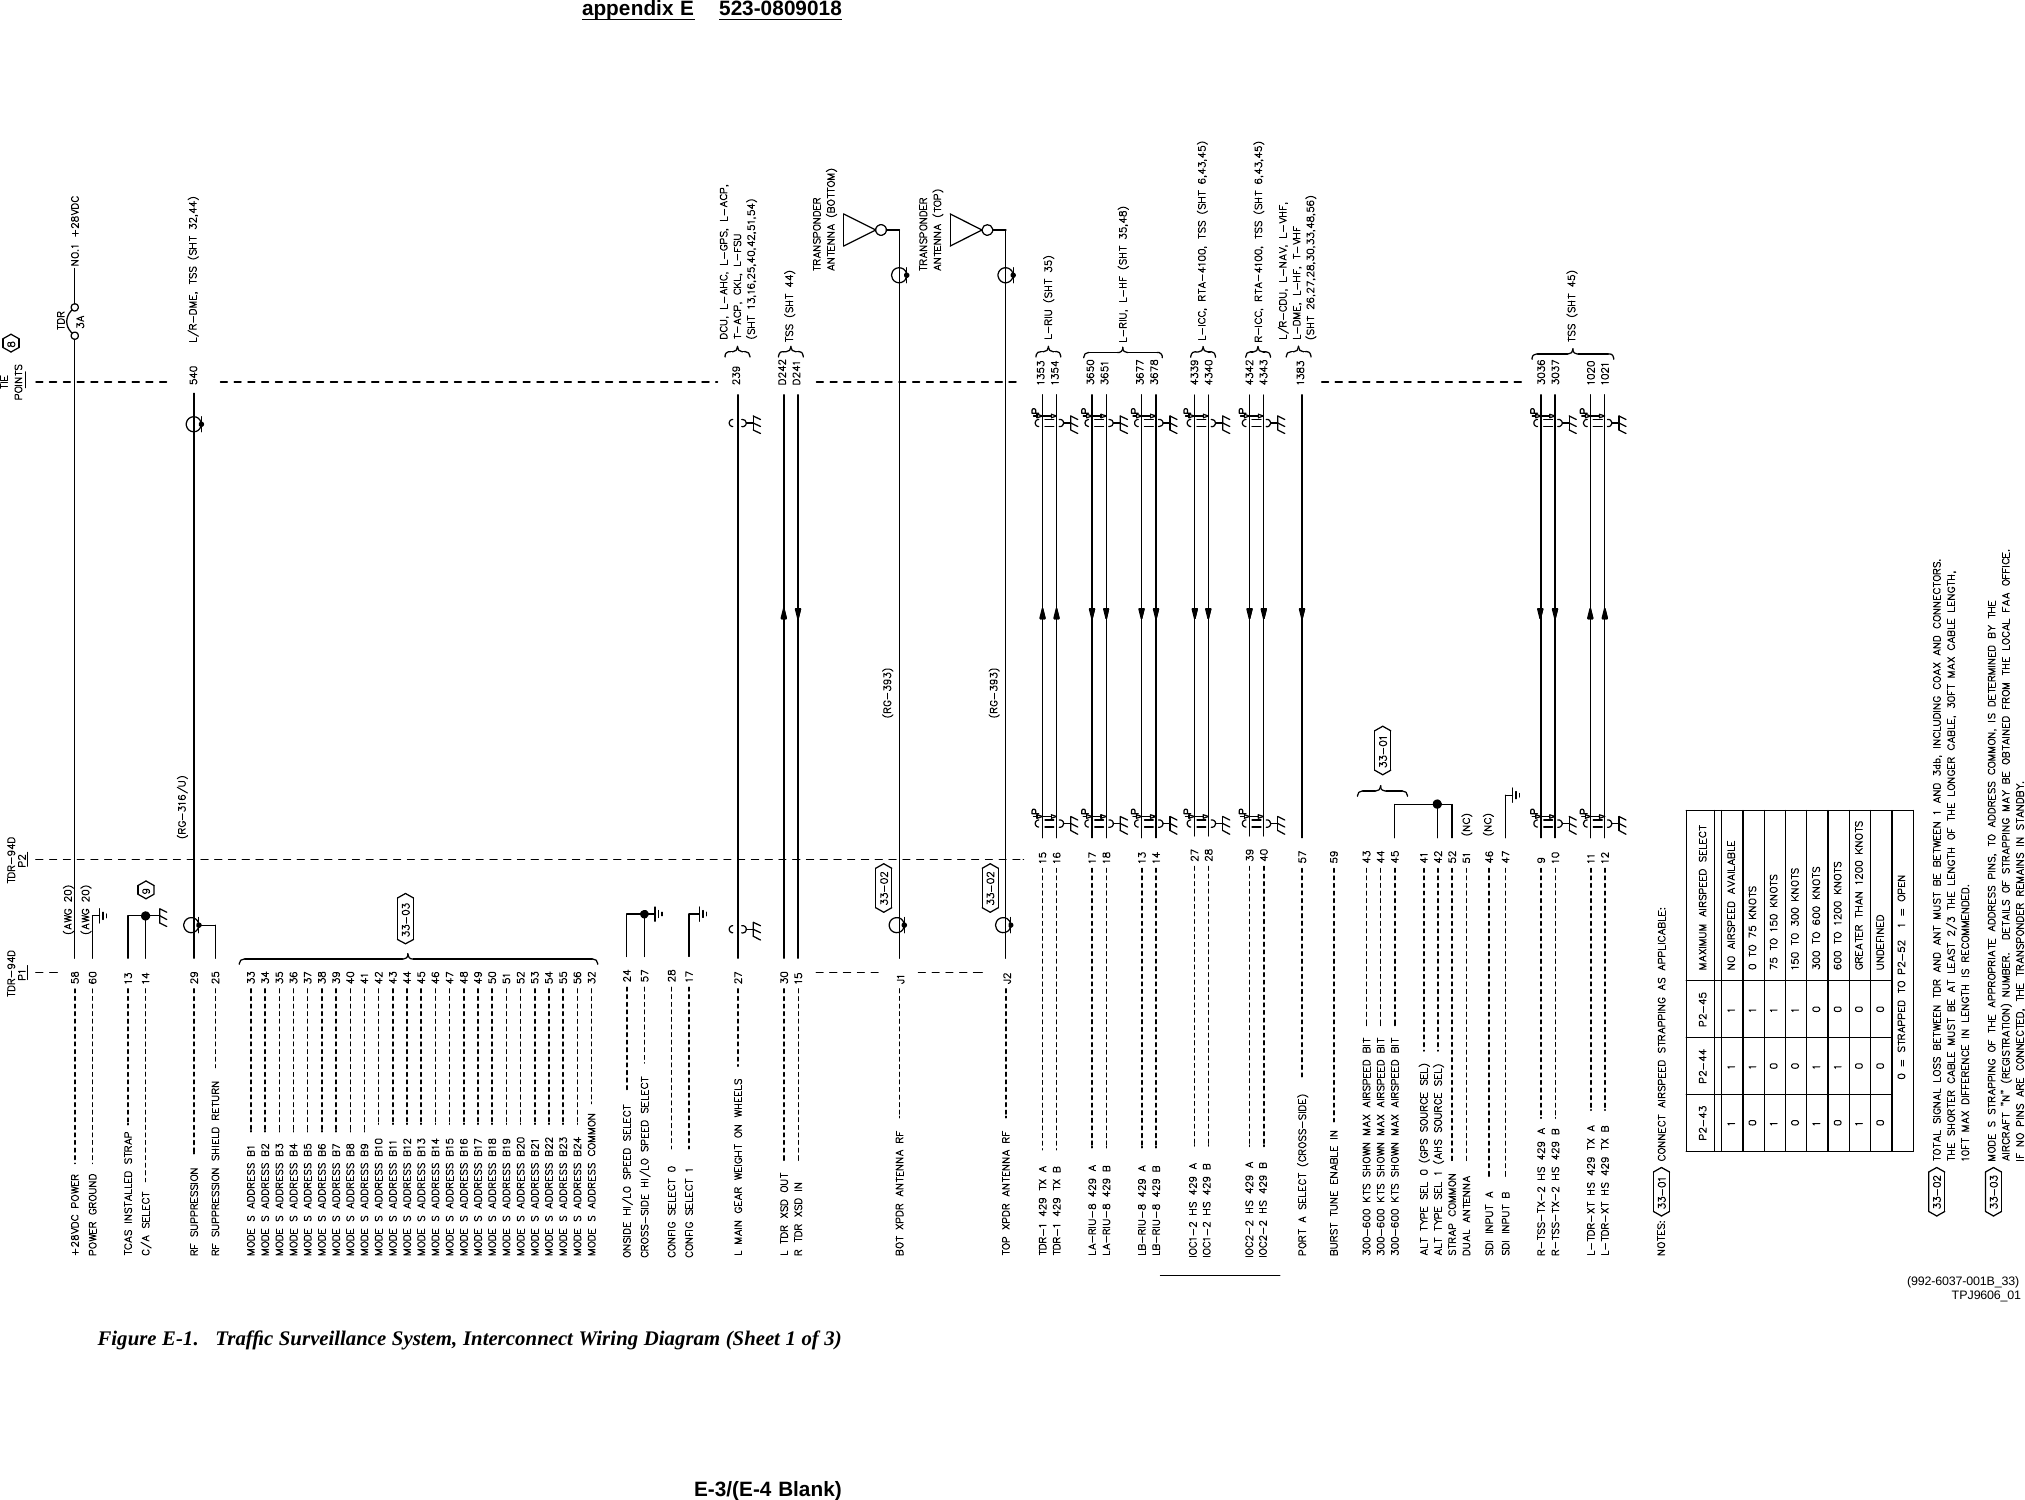 appendix E 523-0809018(992-6037-001B_33)TPJ9606_01Figure E-1. Trafﬁc Surveillance System, Interconnect Wiring Diagram (Sheet 1 of 3)E-3/(E-4 Blank)